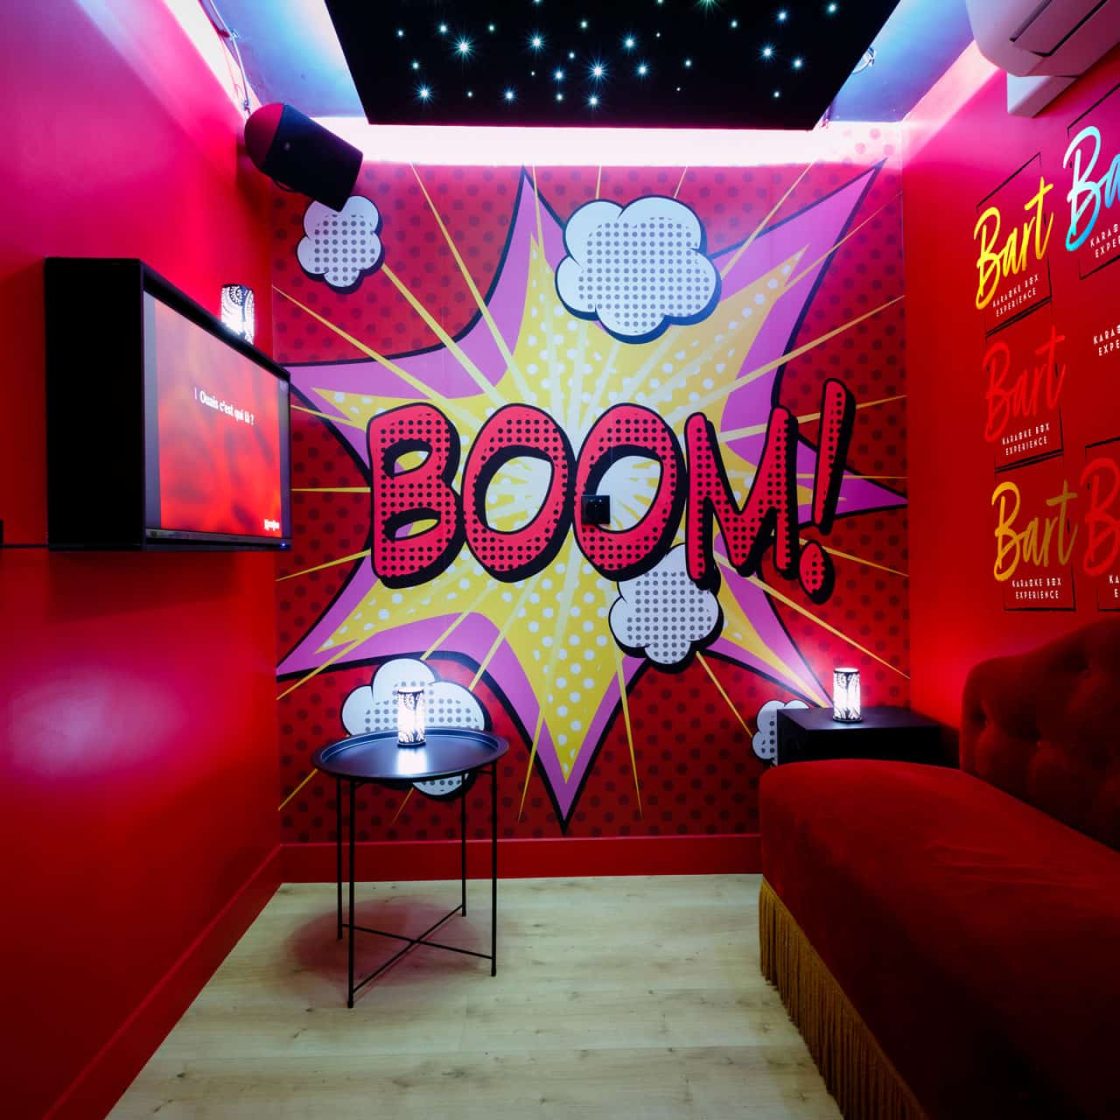 bart-karaoke-box-paris-3-salon-boom-3